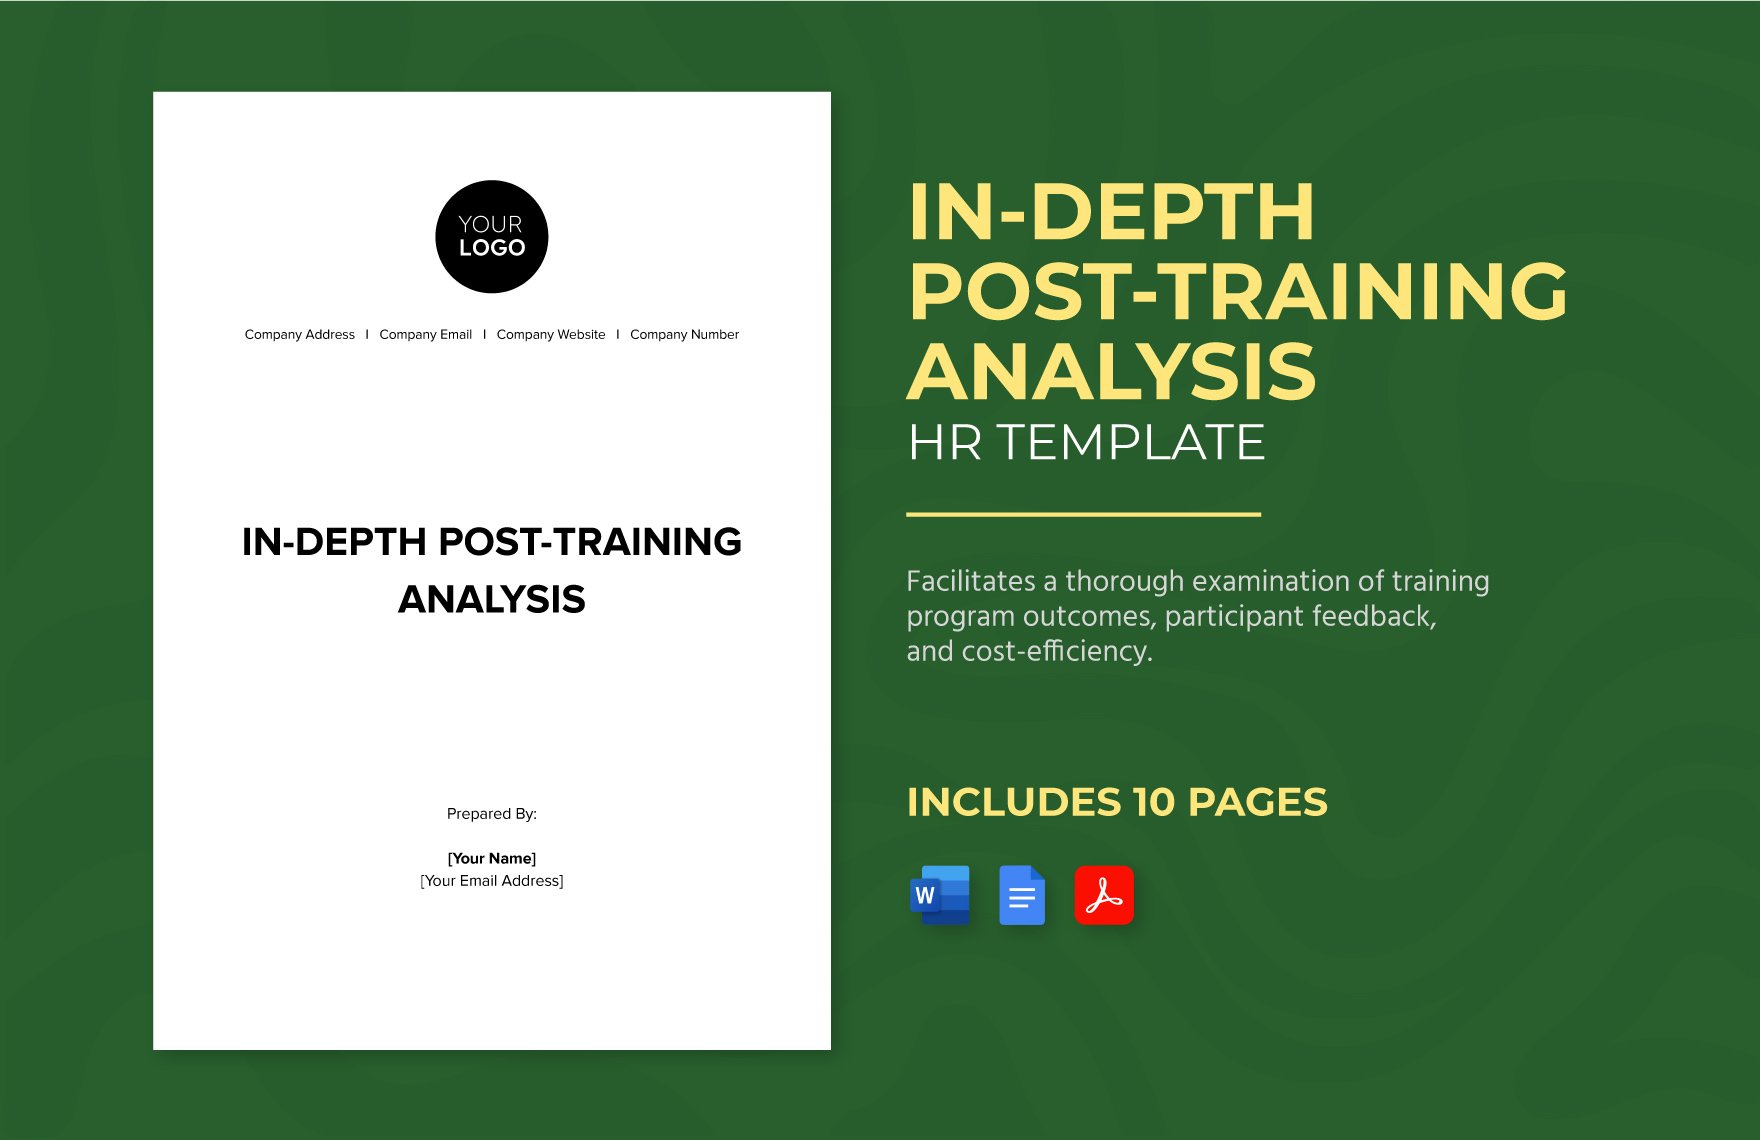 In-depth Post-training Analysis HR Template